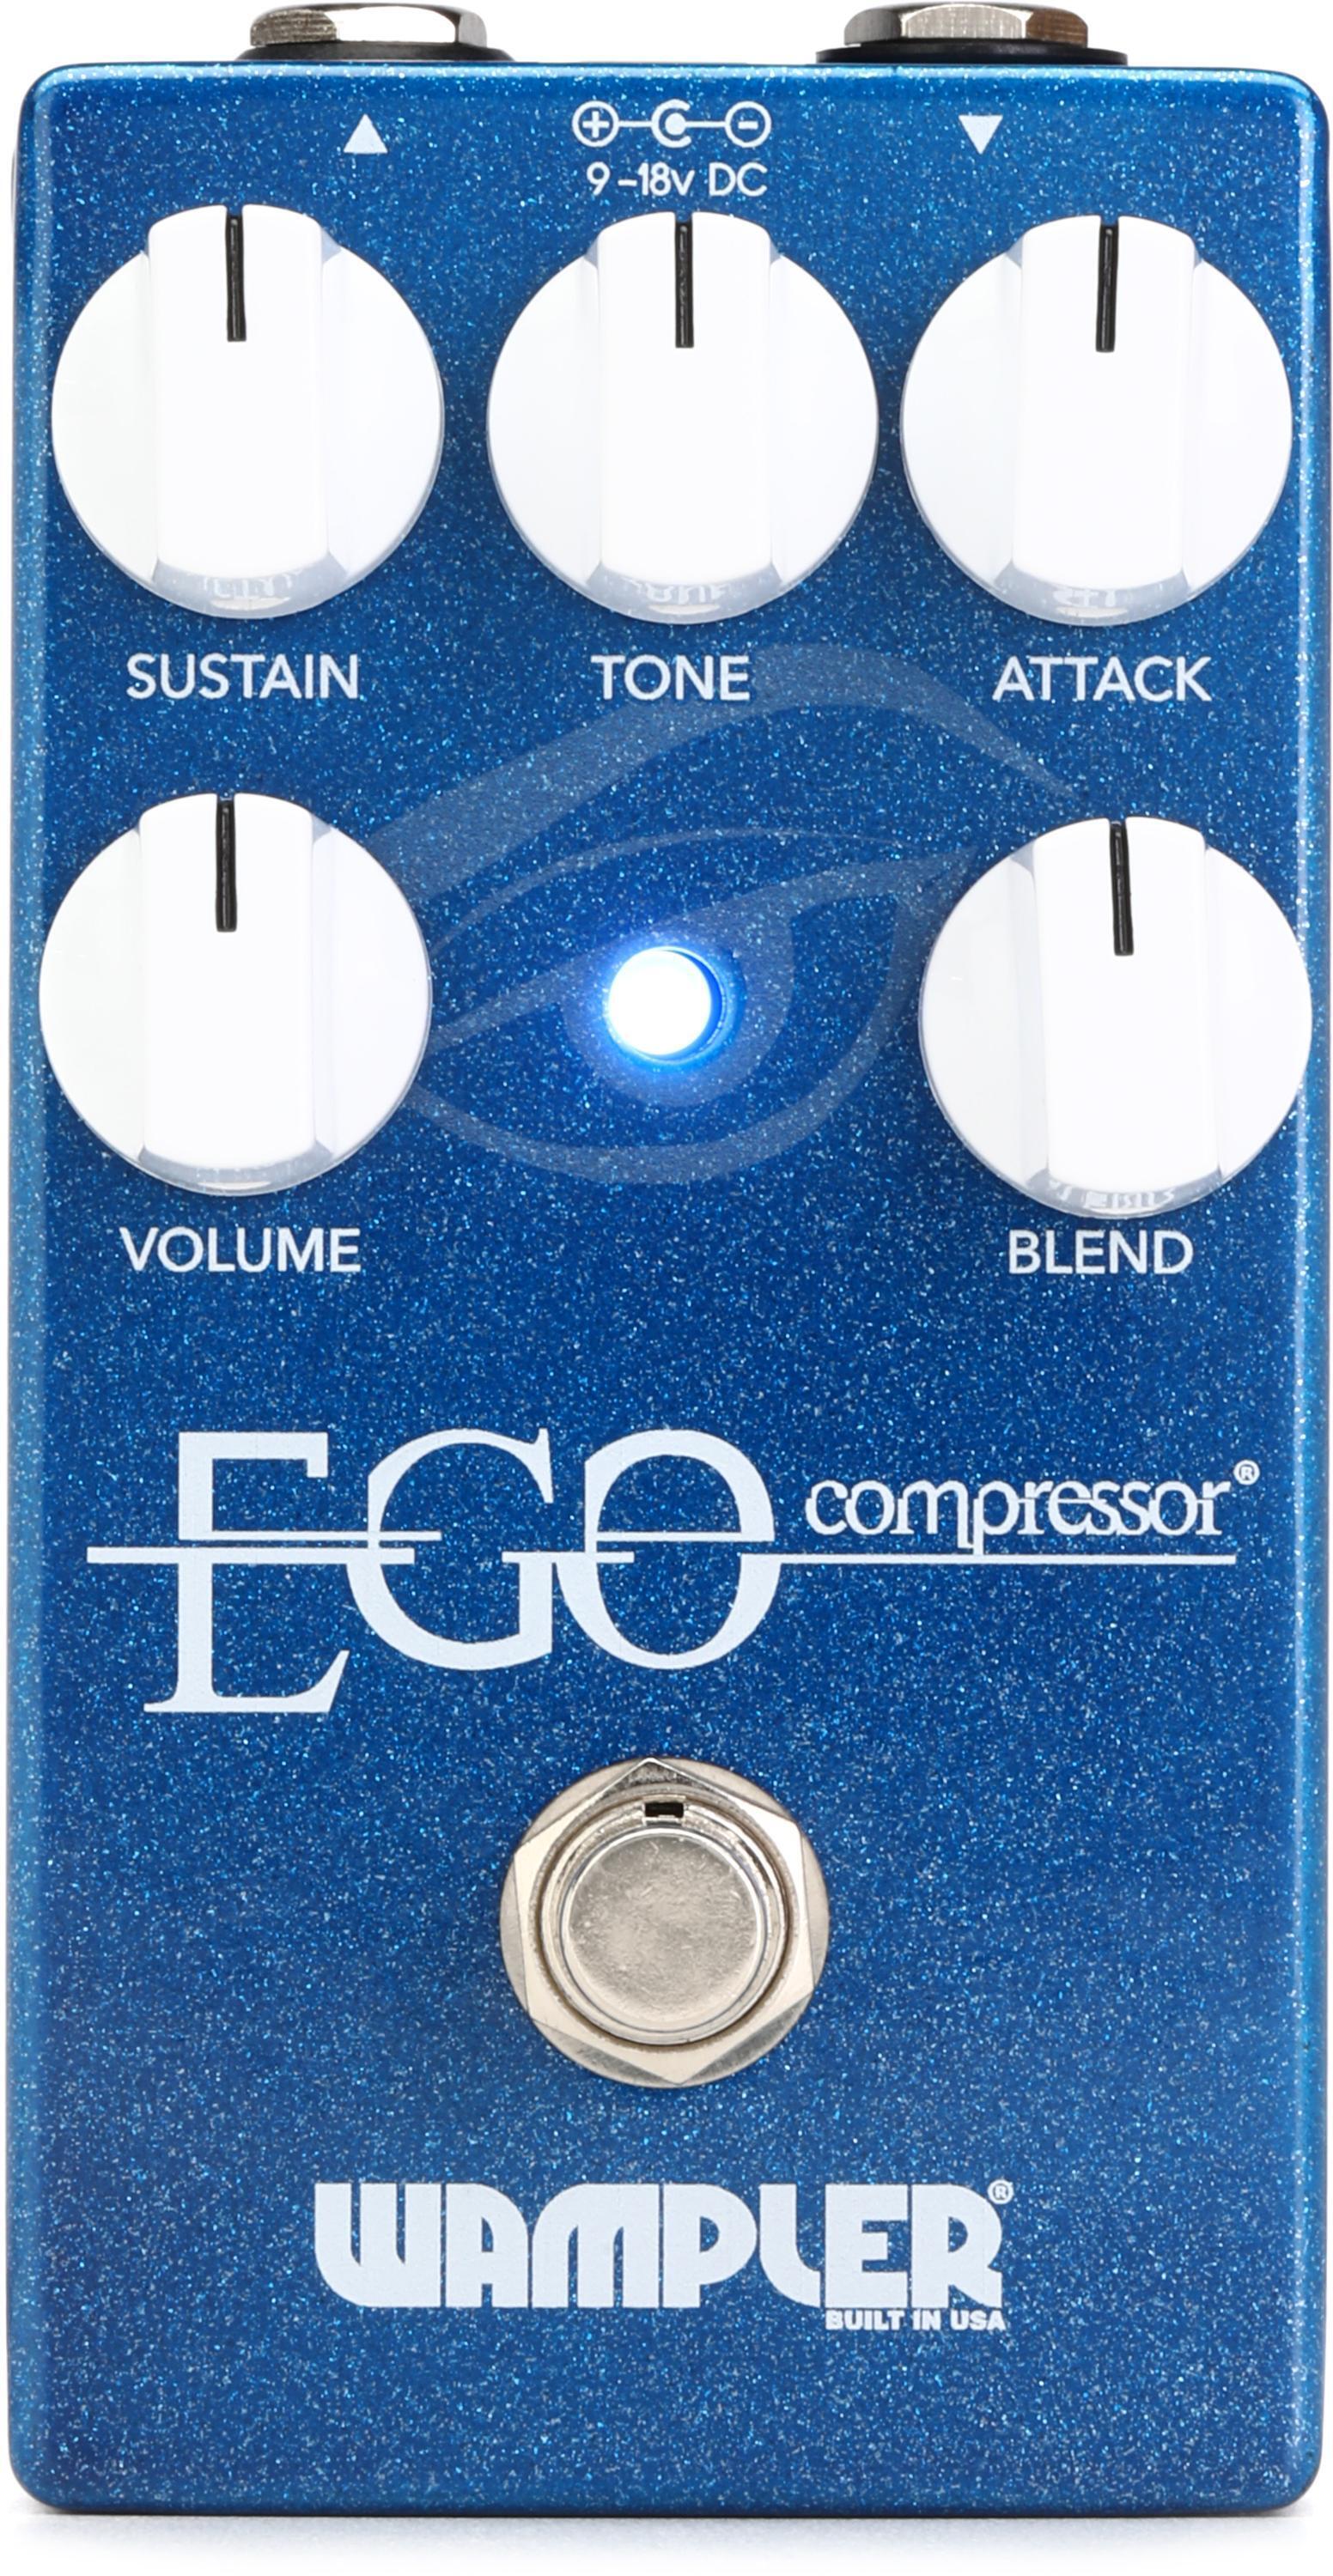 Wampler Ego Compressor Pedal with Blend Control